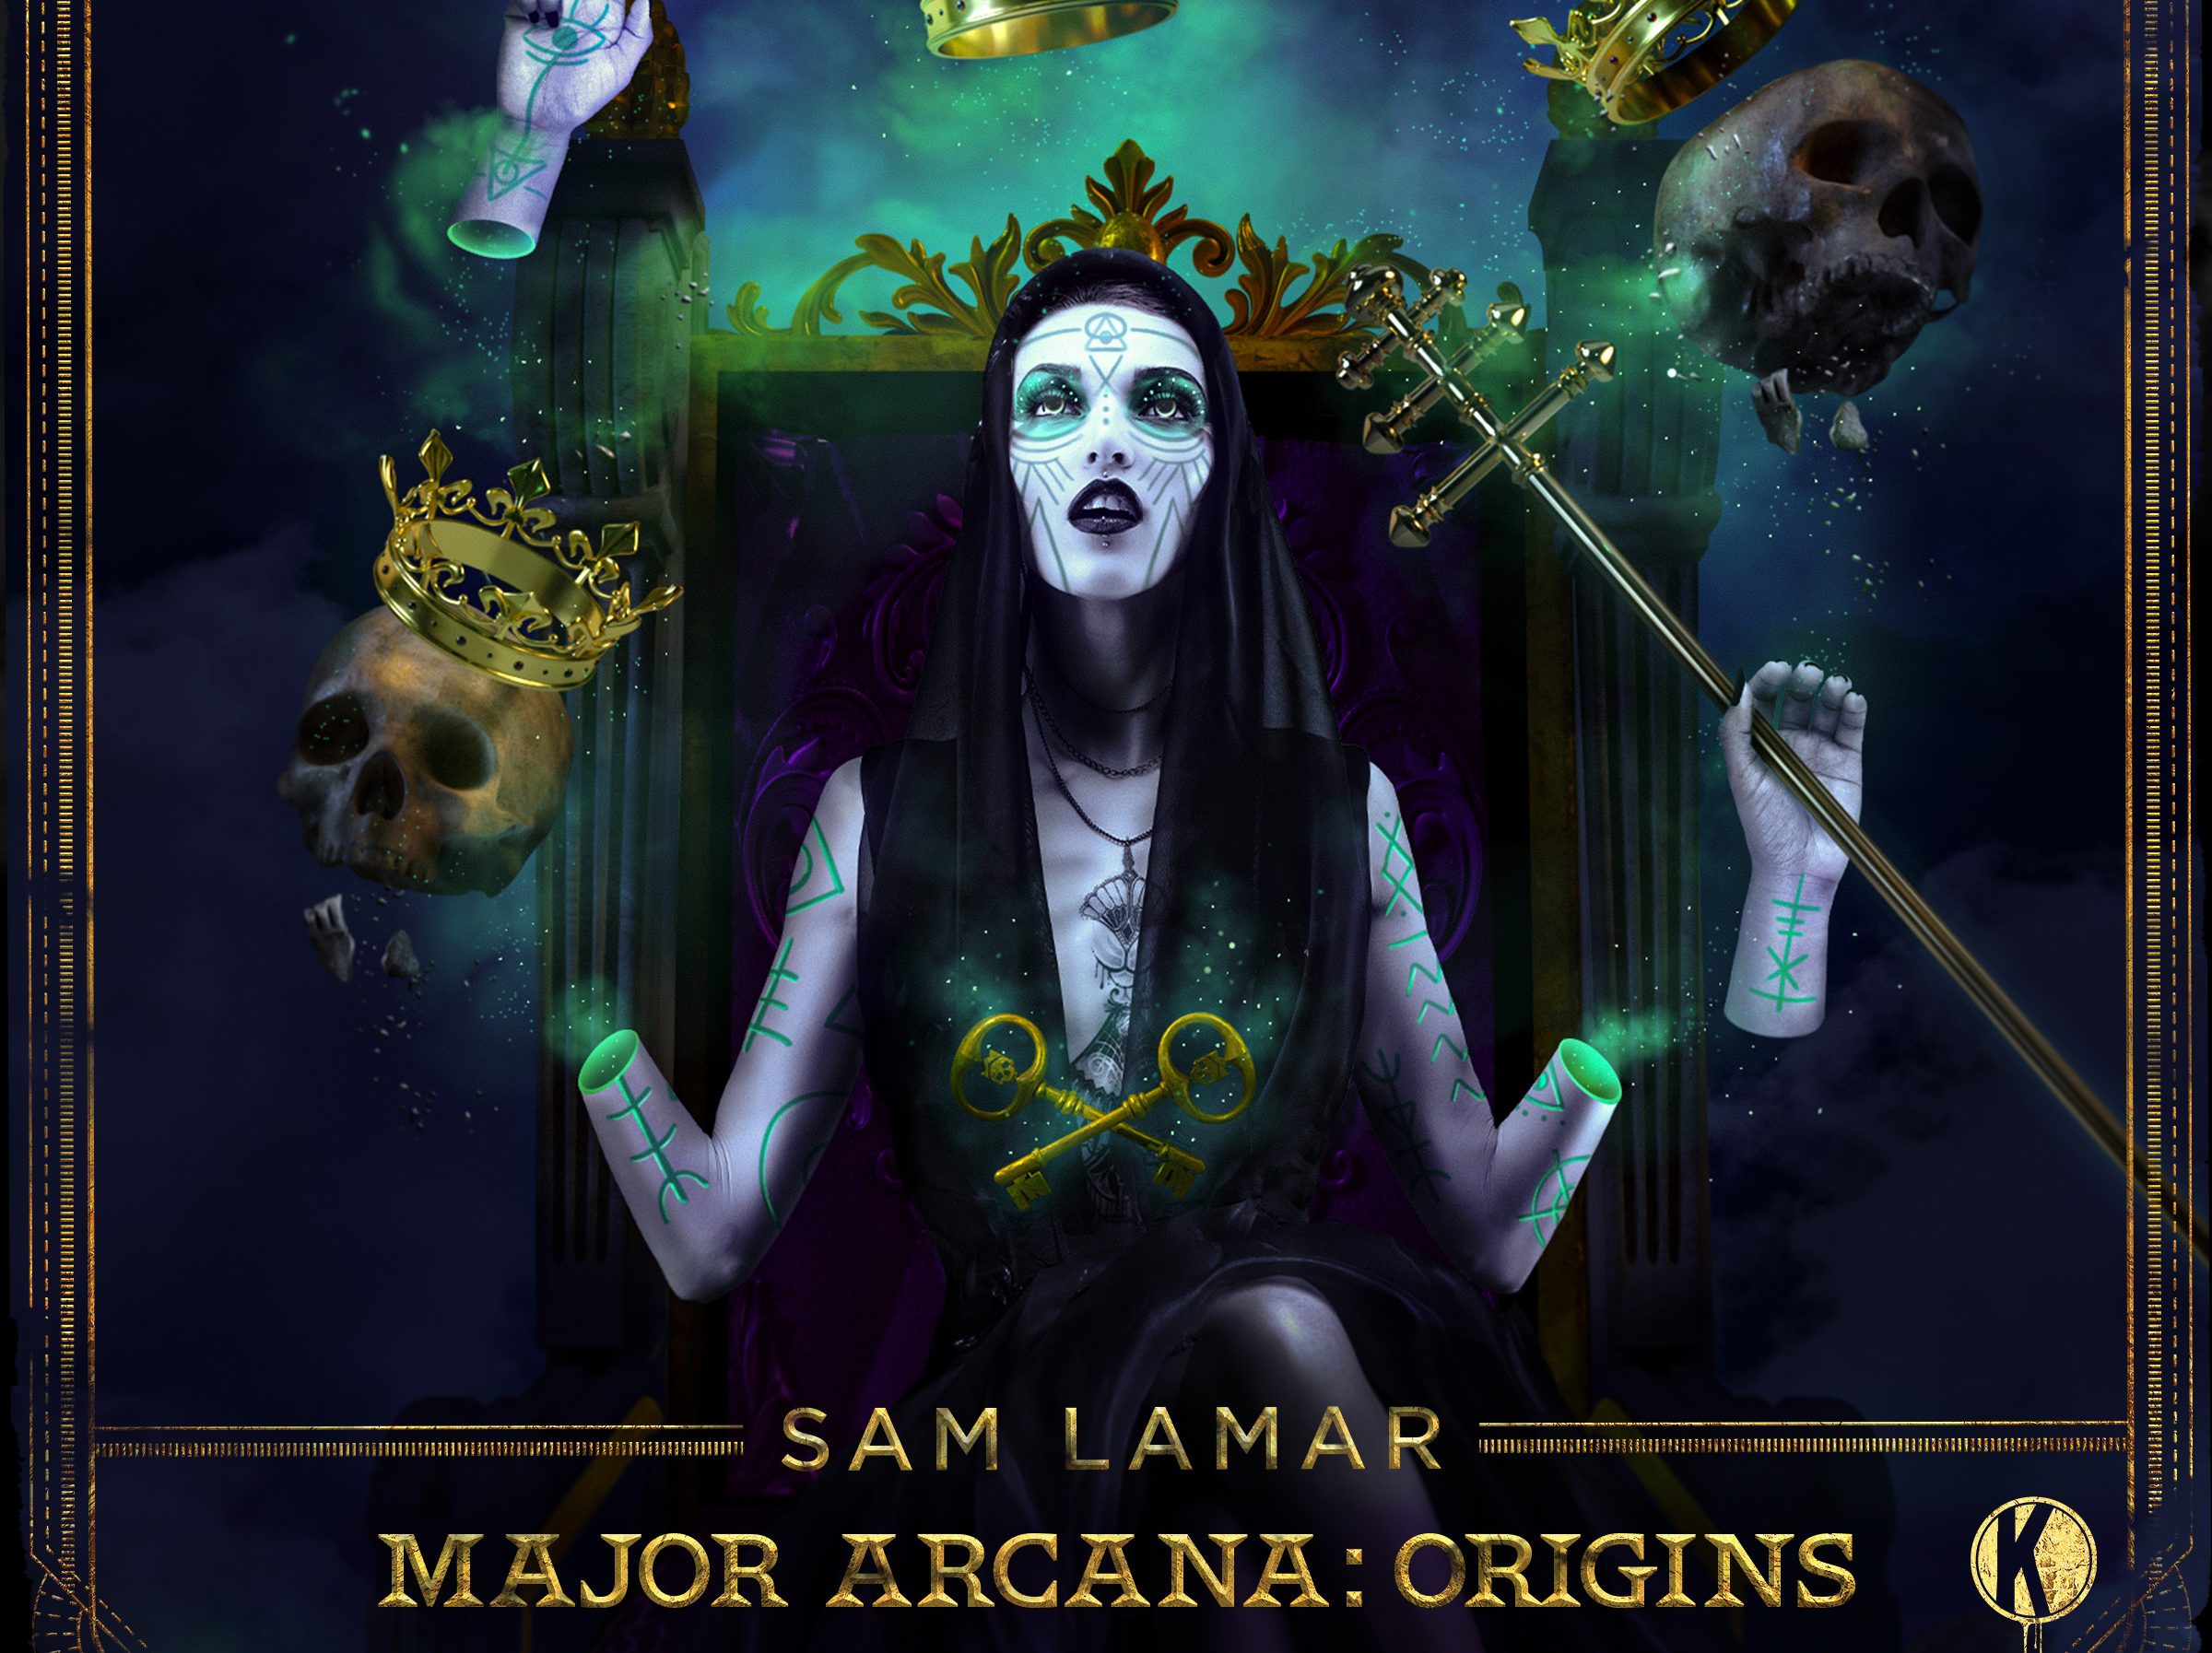 Sam Lamar Shows His Origins of Major Arcana